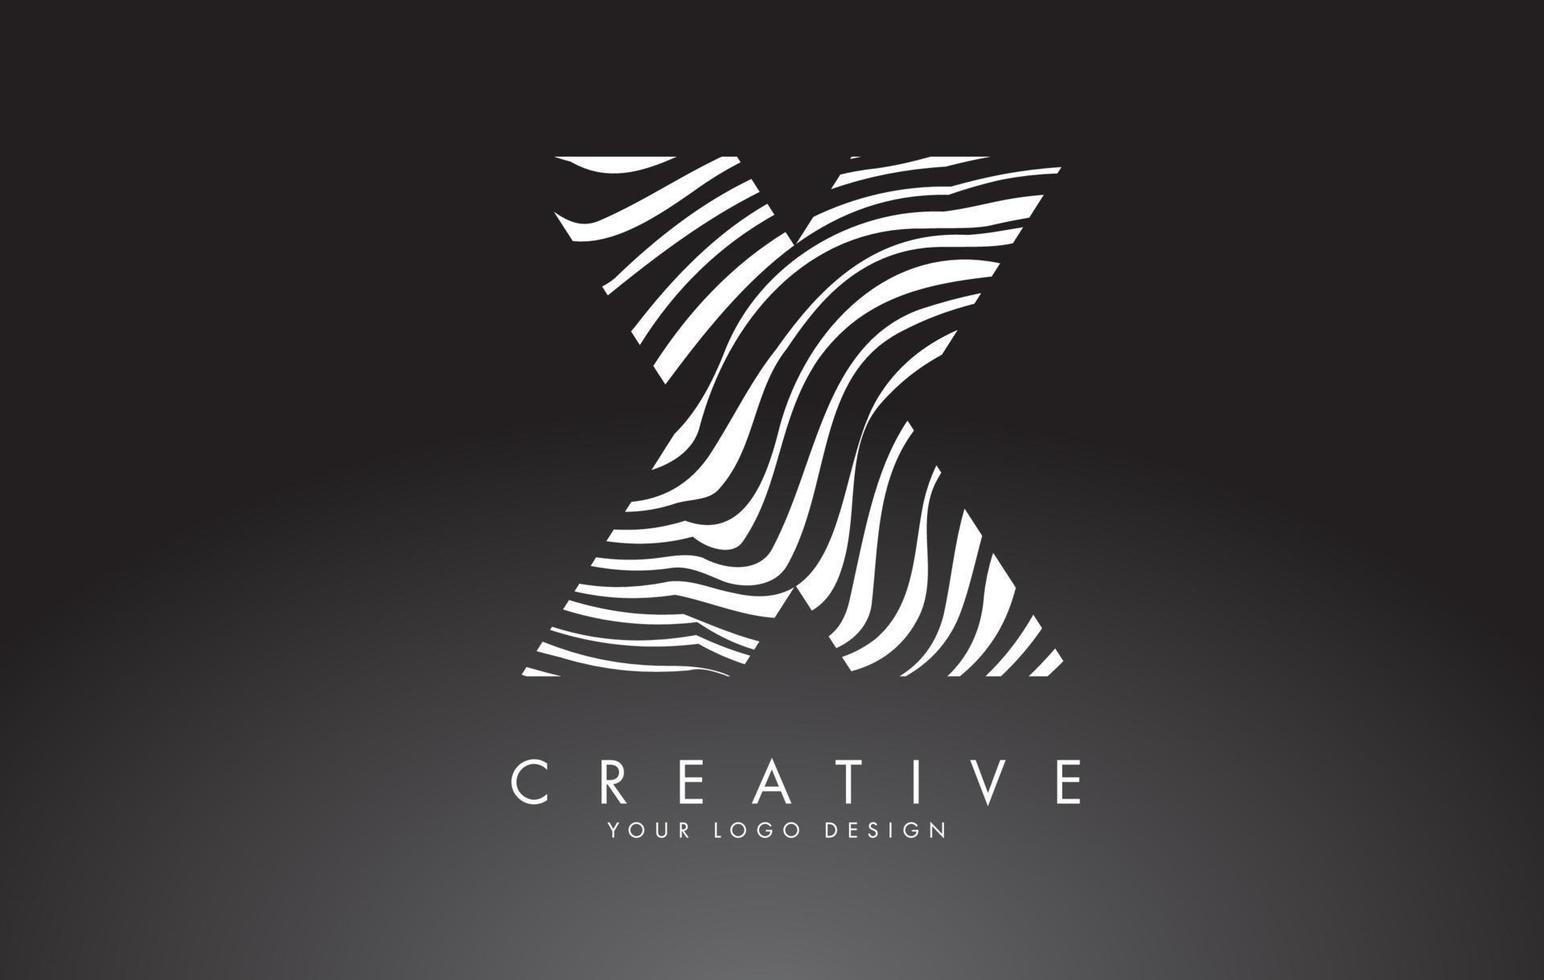 X Letter Logo Design with Fingerprint, black and white wood or Zebra texture on a Black Background. vector